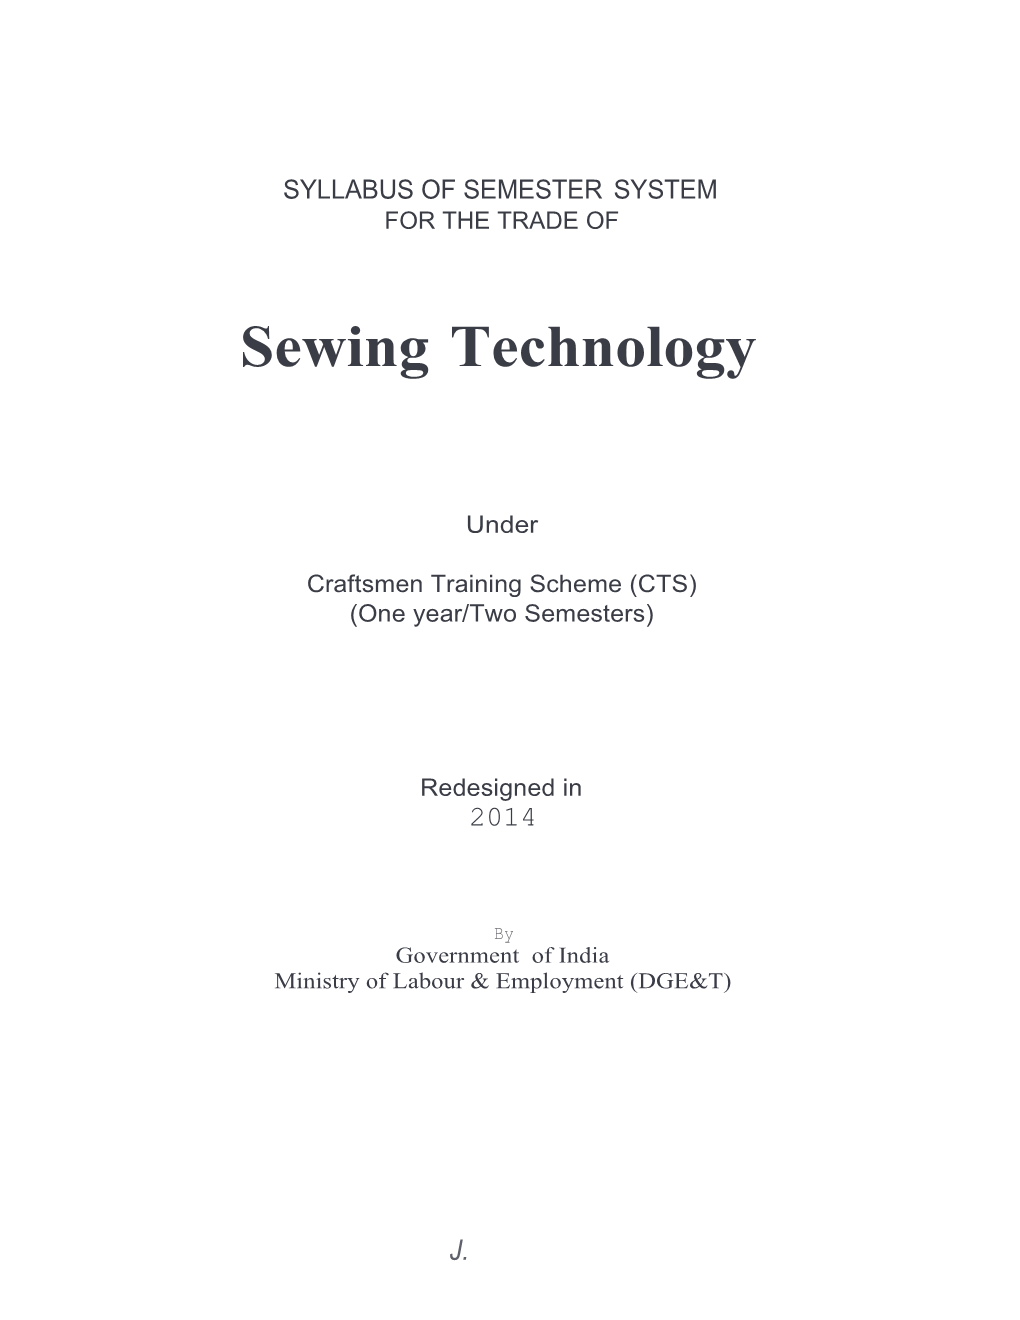 Sewing Technology